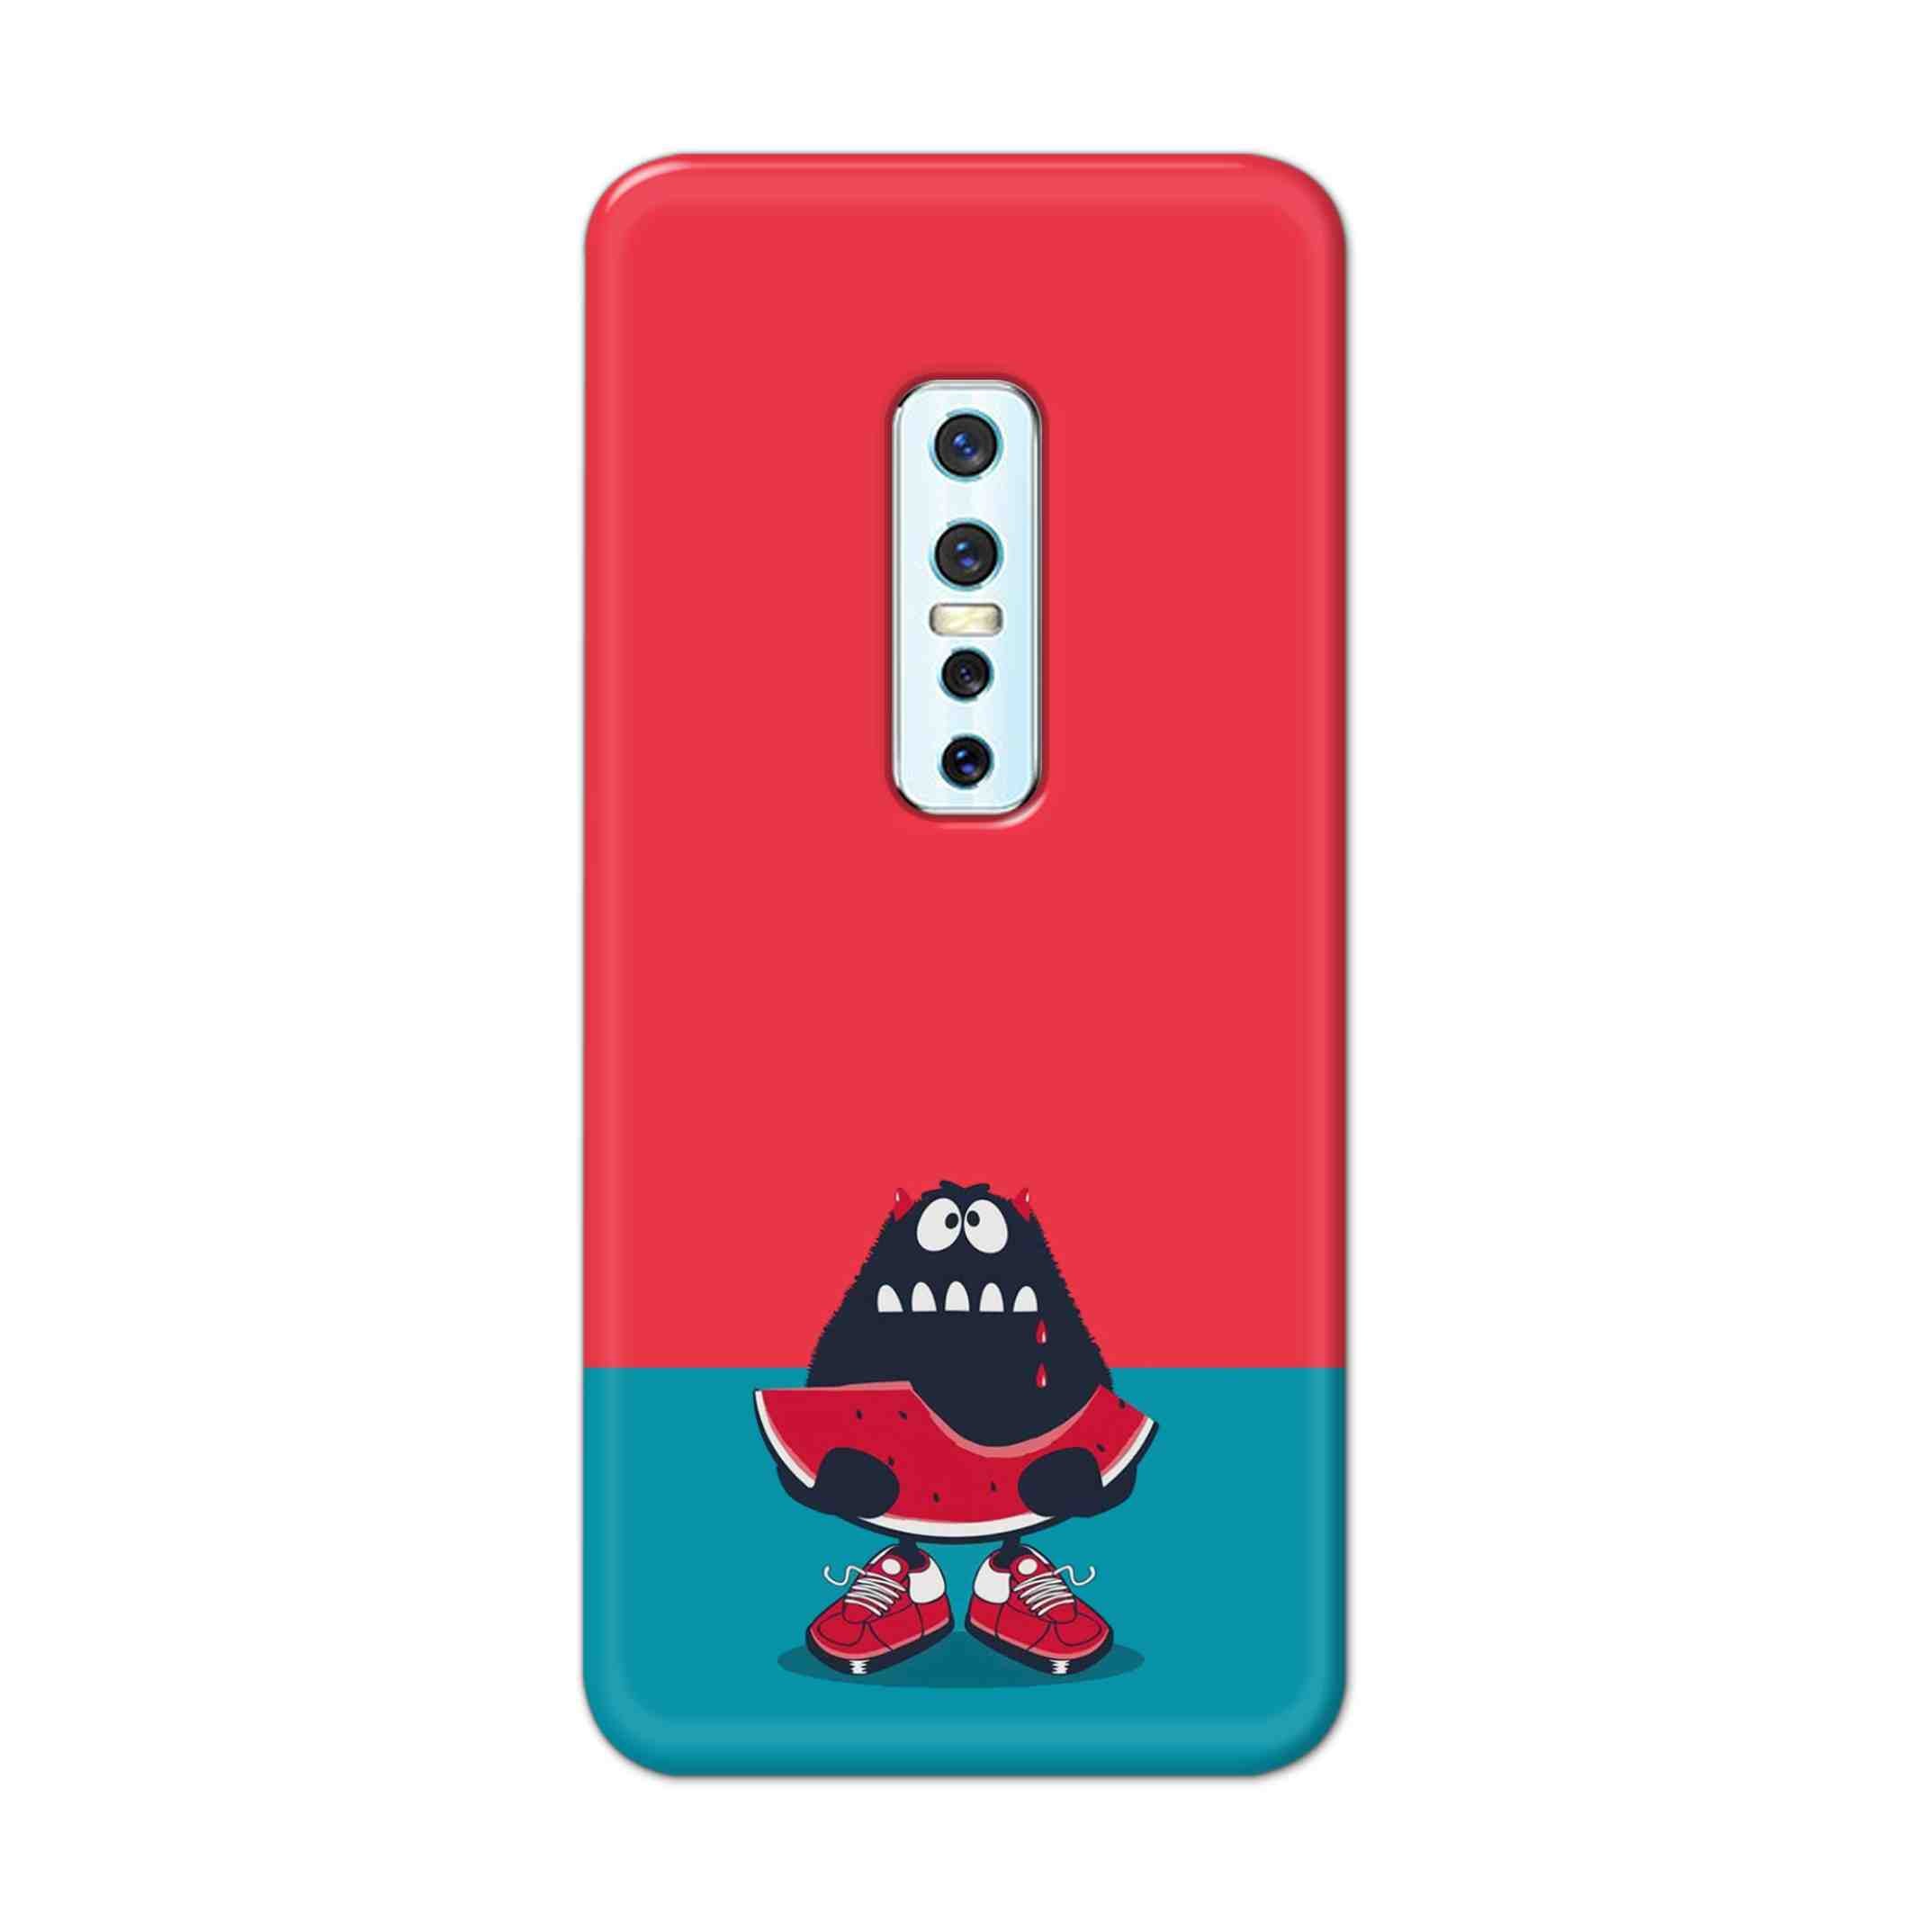 Buy Watermelon Hard Back Mobile Phone Case Cover For Vivo V17 Pro Online